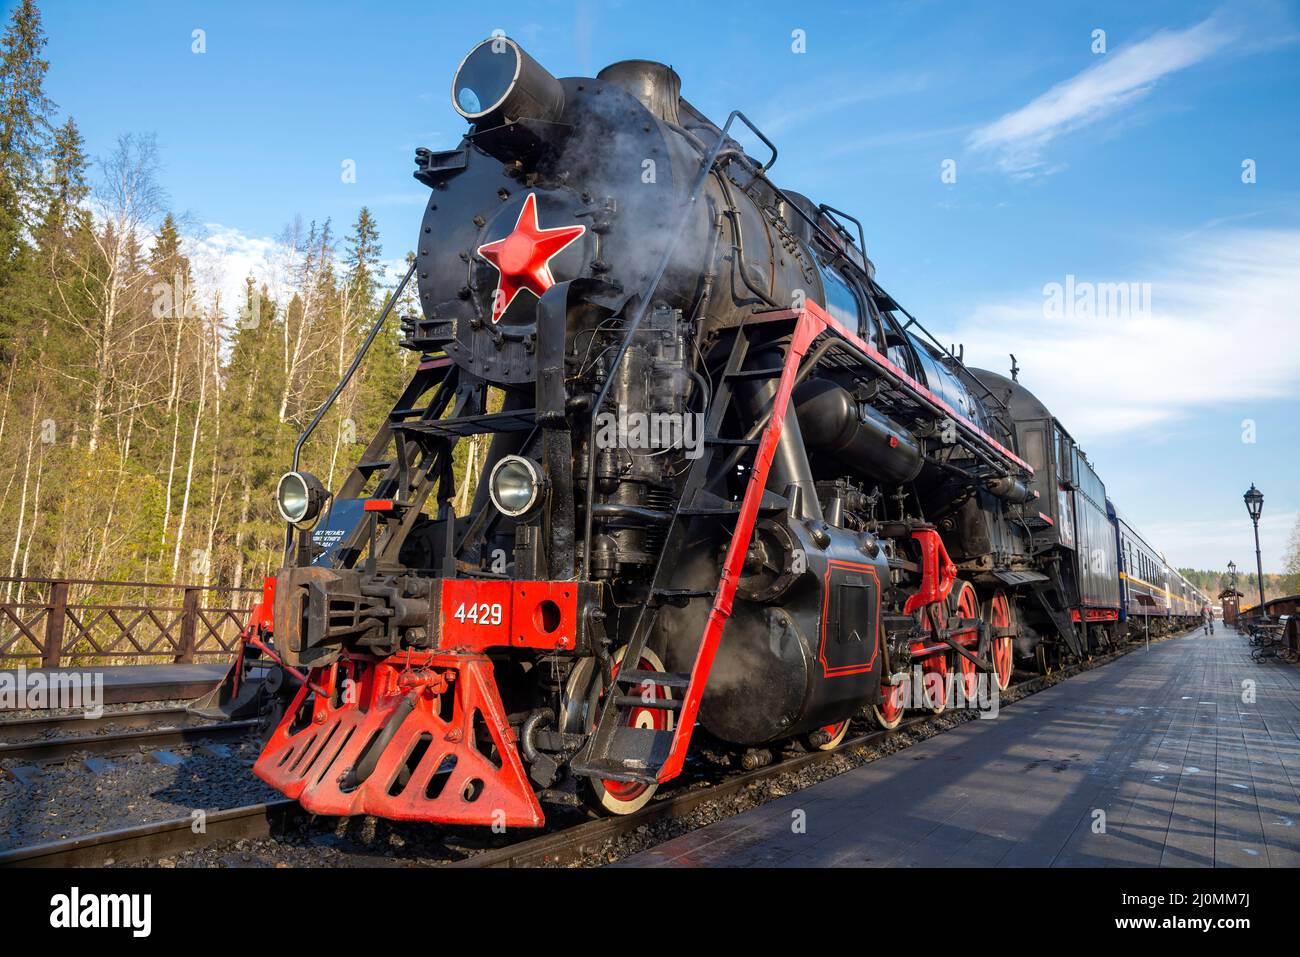 RUSKEALA, RUSSIE - 07 OCTOBRE 2021 : train rétro touristique 'Ruskeala Express' à la gare 'Mountain Park Ruskeala' Banque D'Images